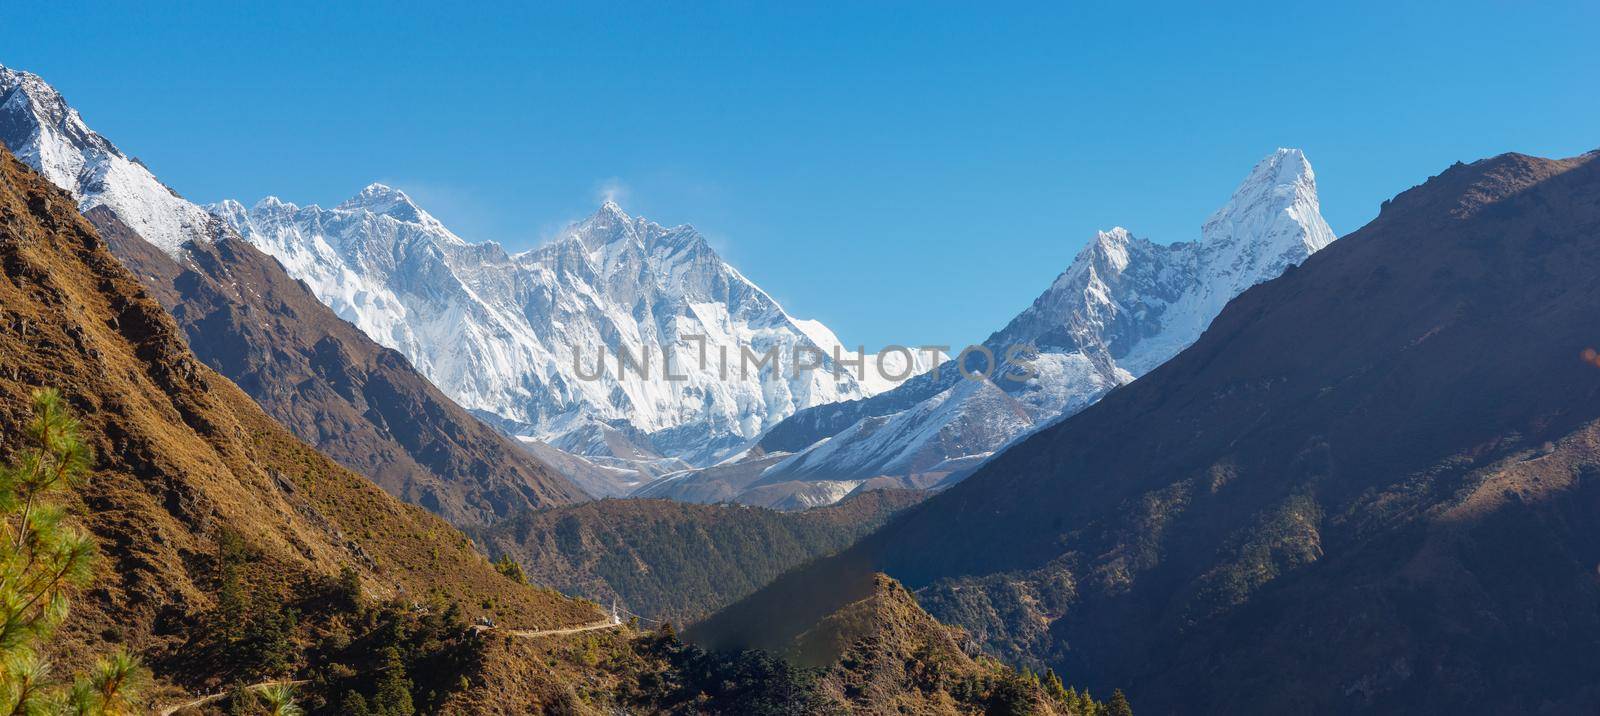 Everest, Lhotse and Ama Dablam summits.  by Arsgera